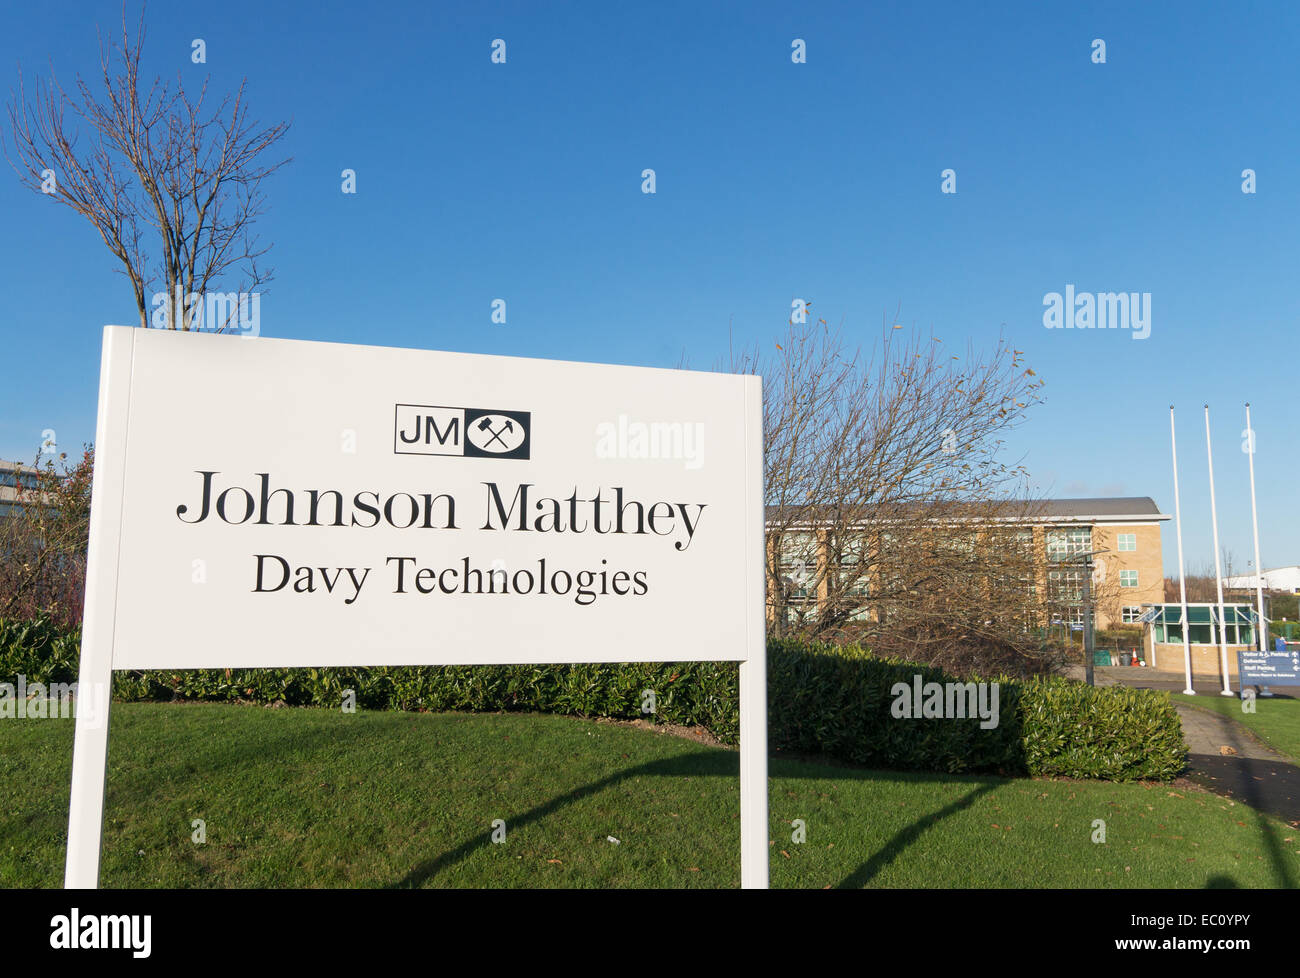 Johnson Matthey, Davy Technologies, sign Stockton, north east England, UK Stock Photo